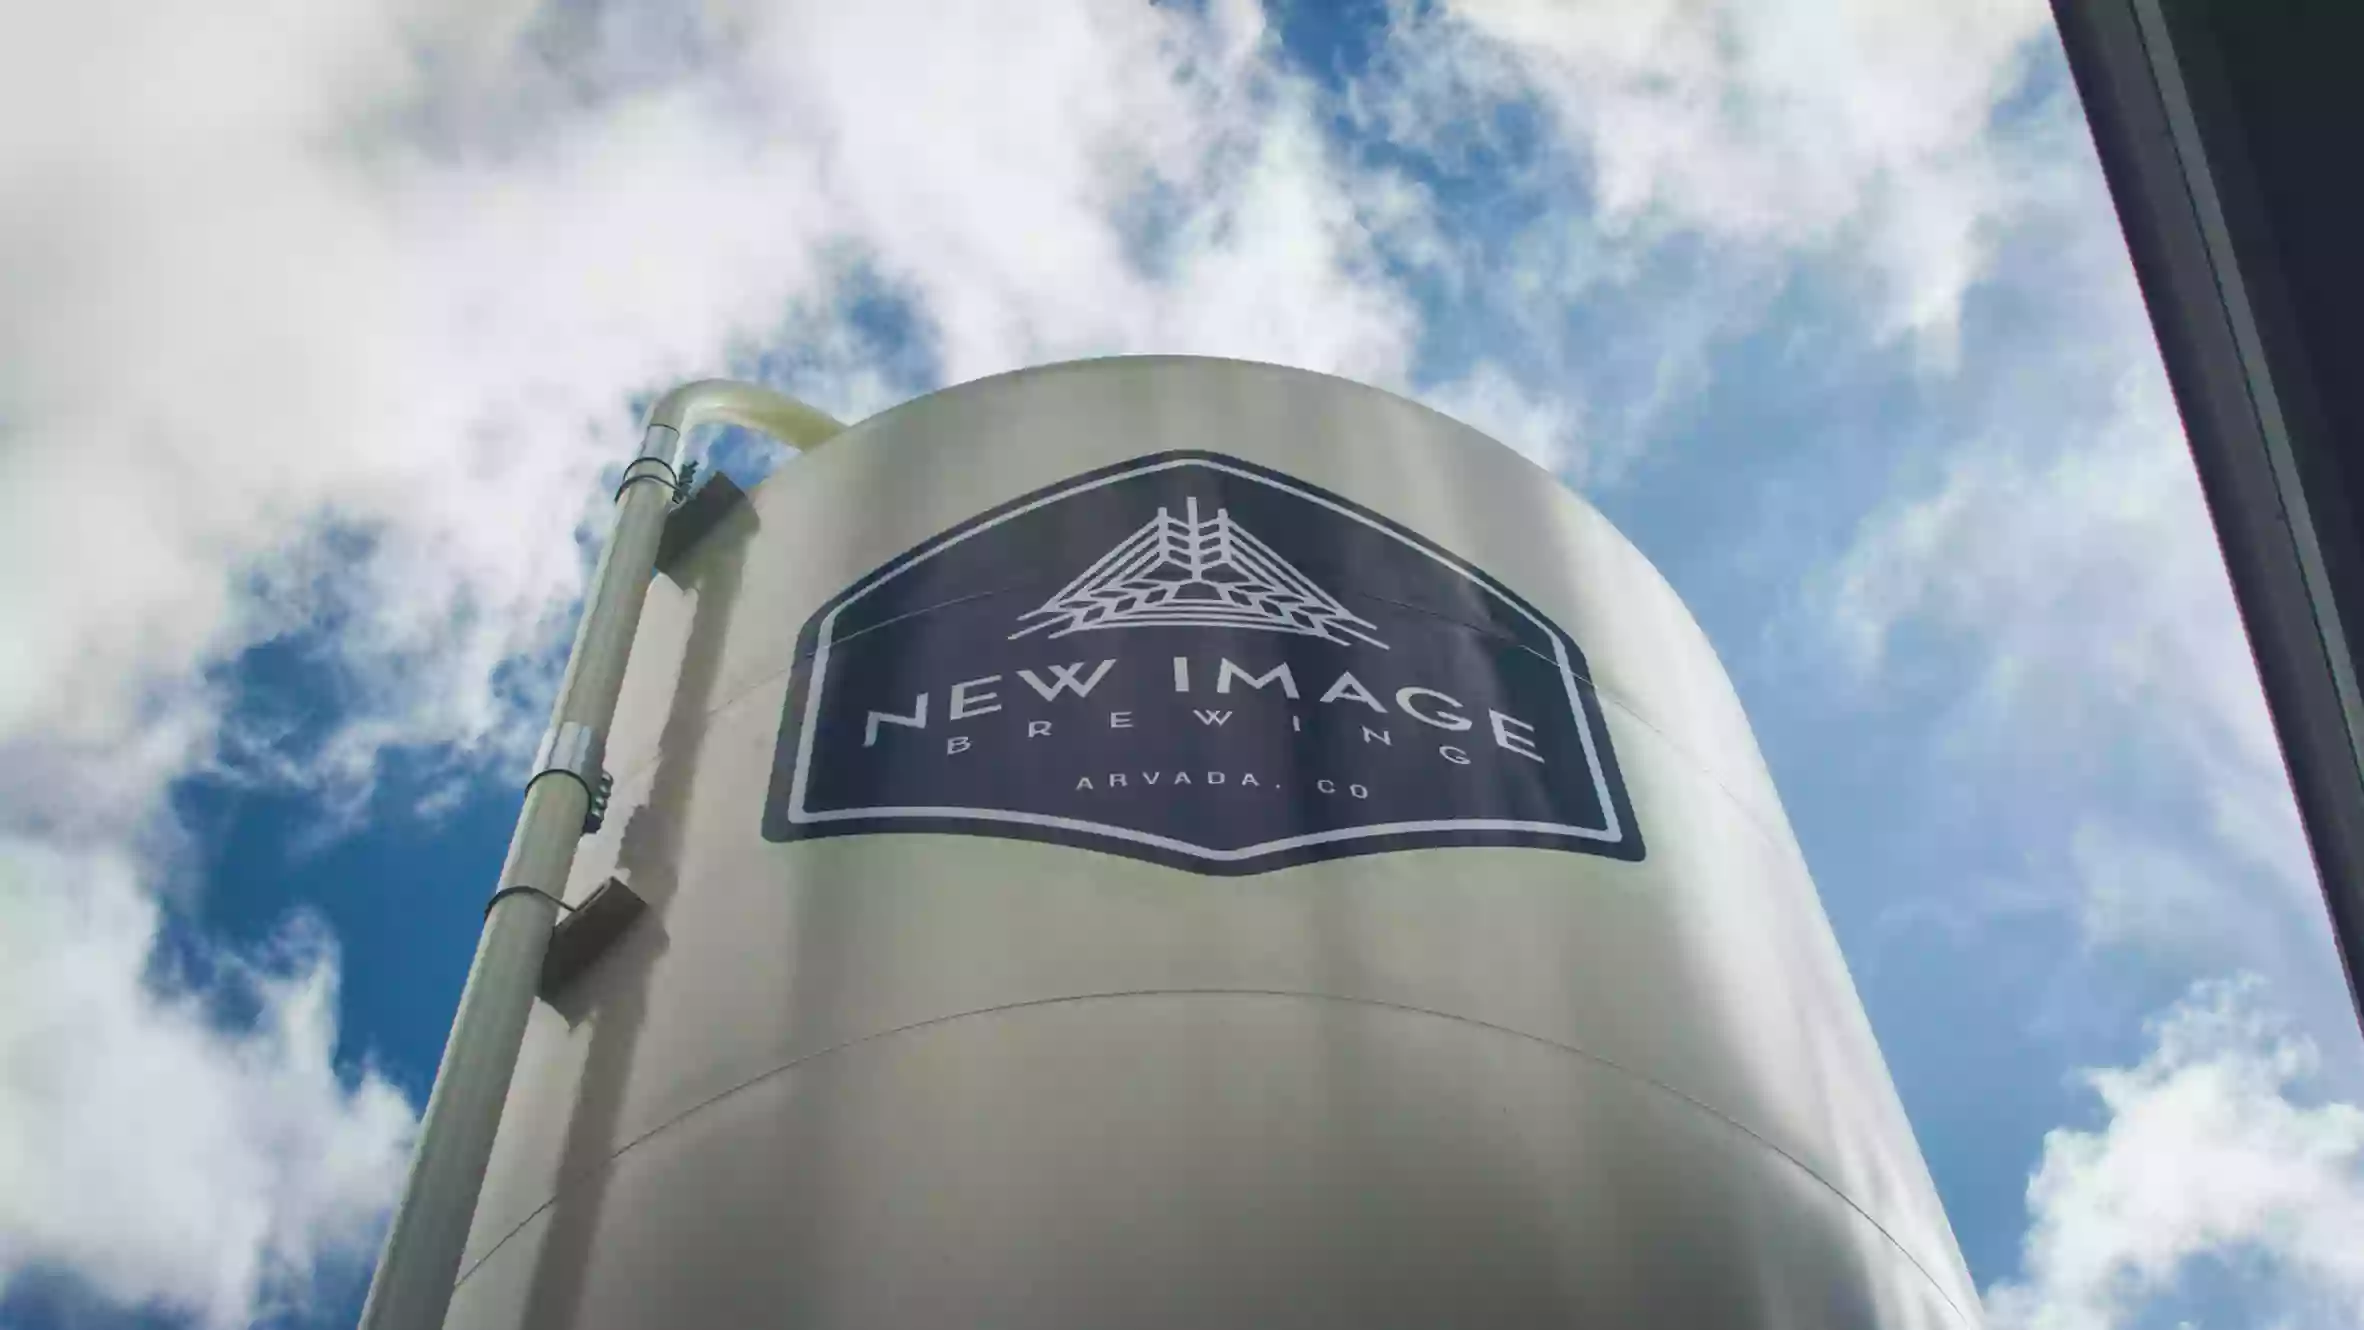 New Image Brewing Company - Wheat Ridge